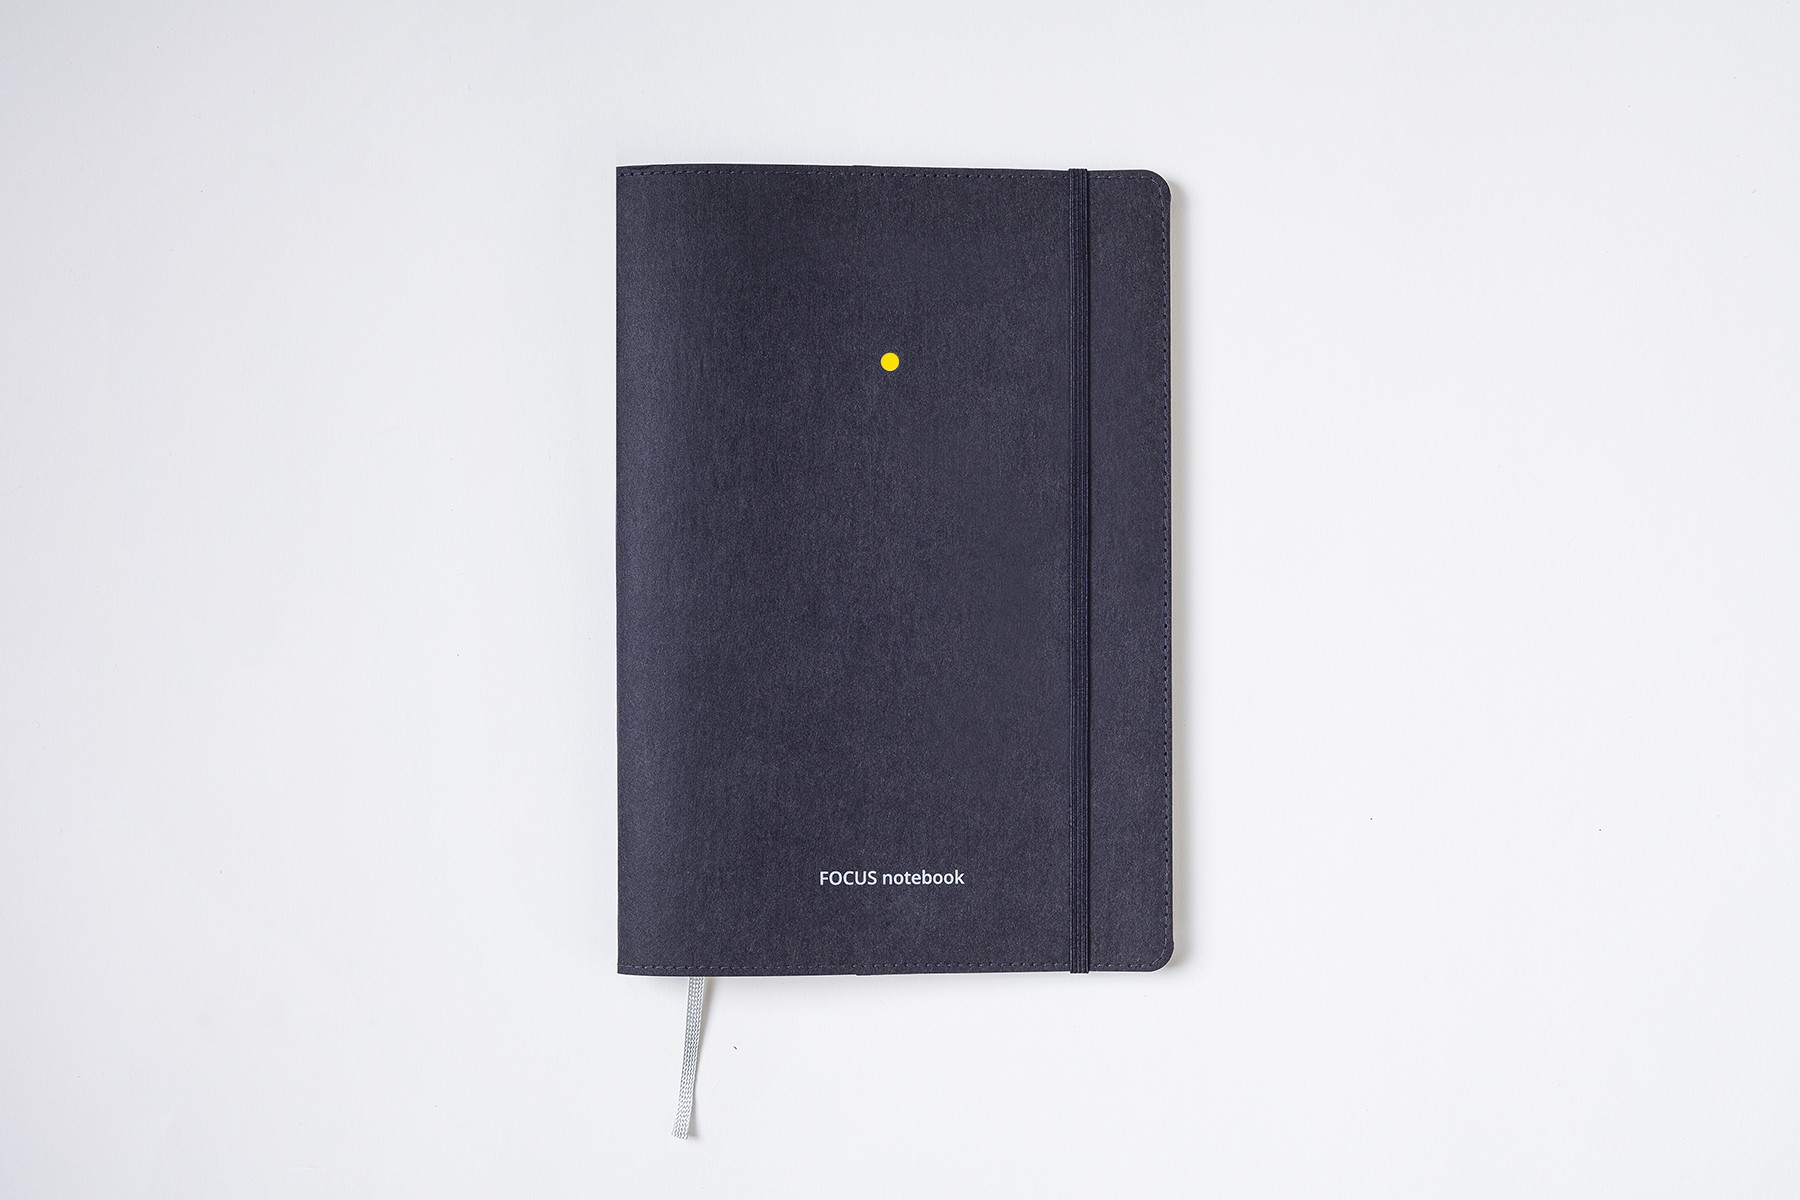 FOCUS notebook